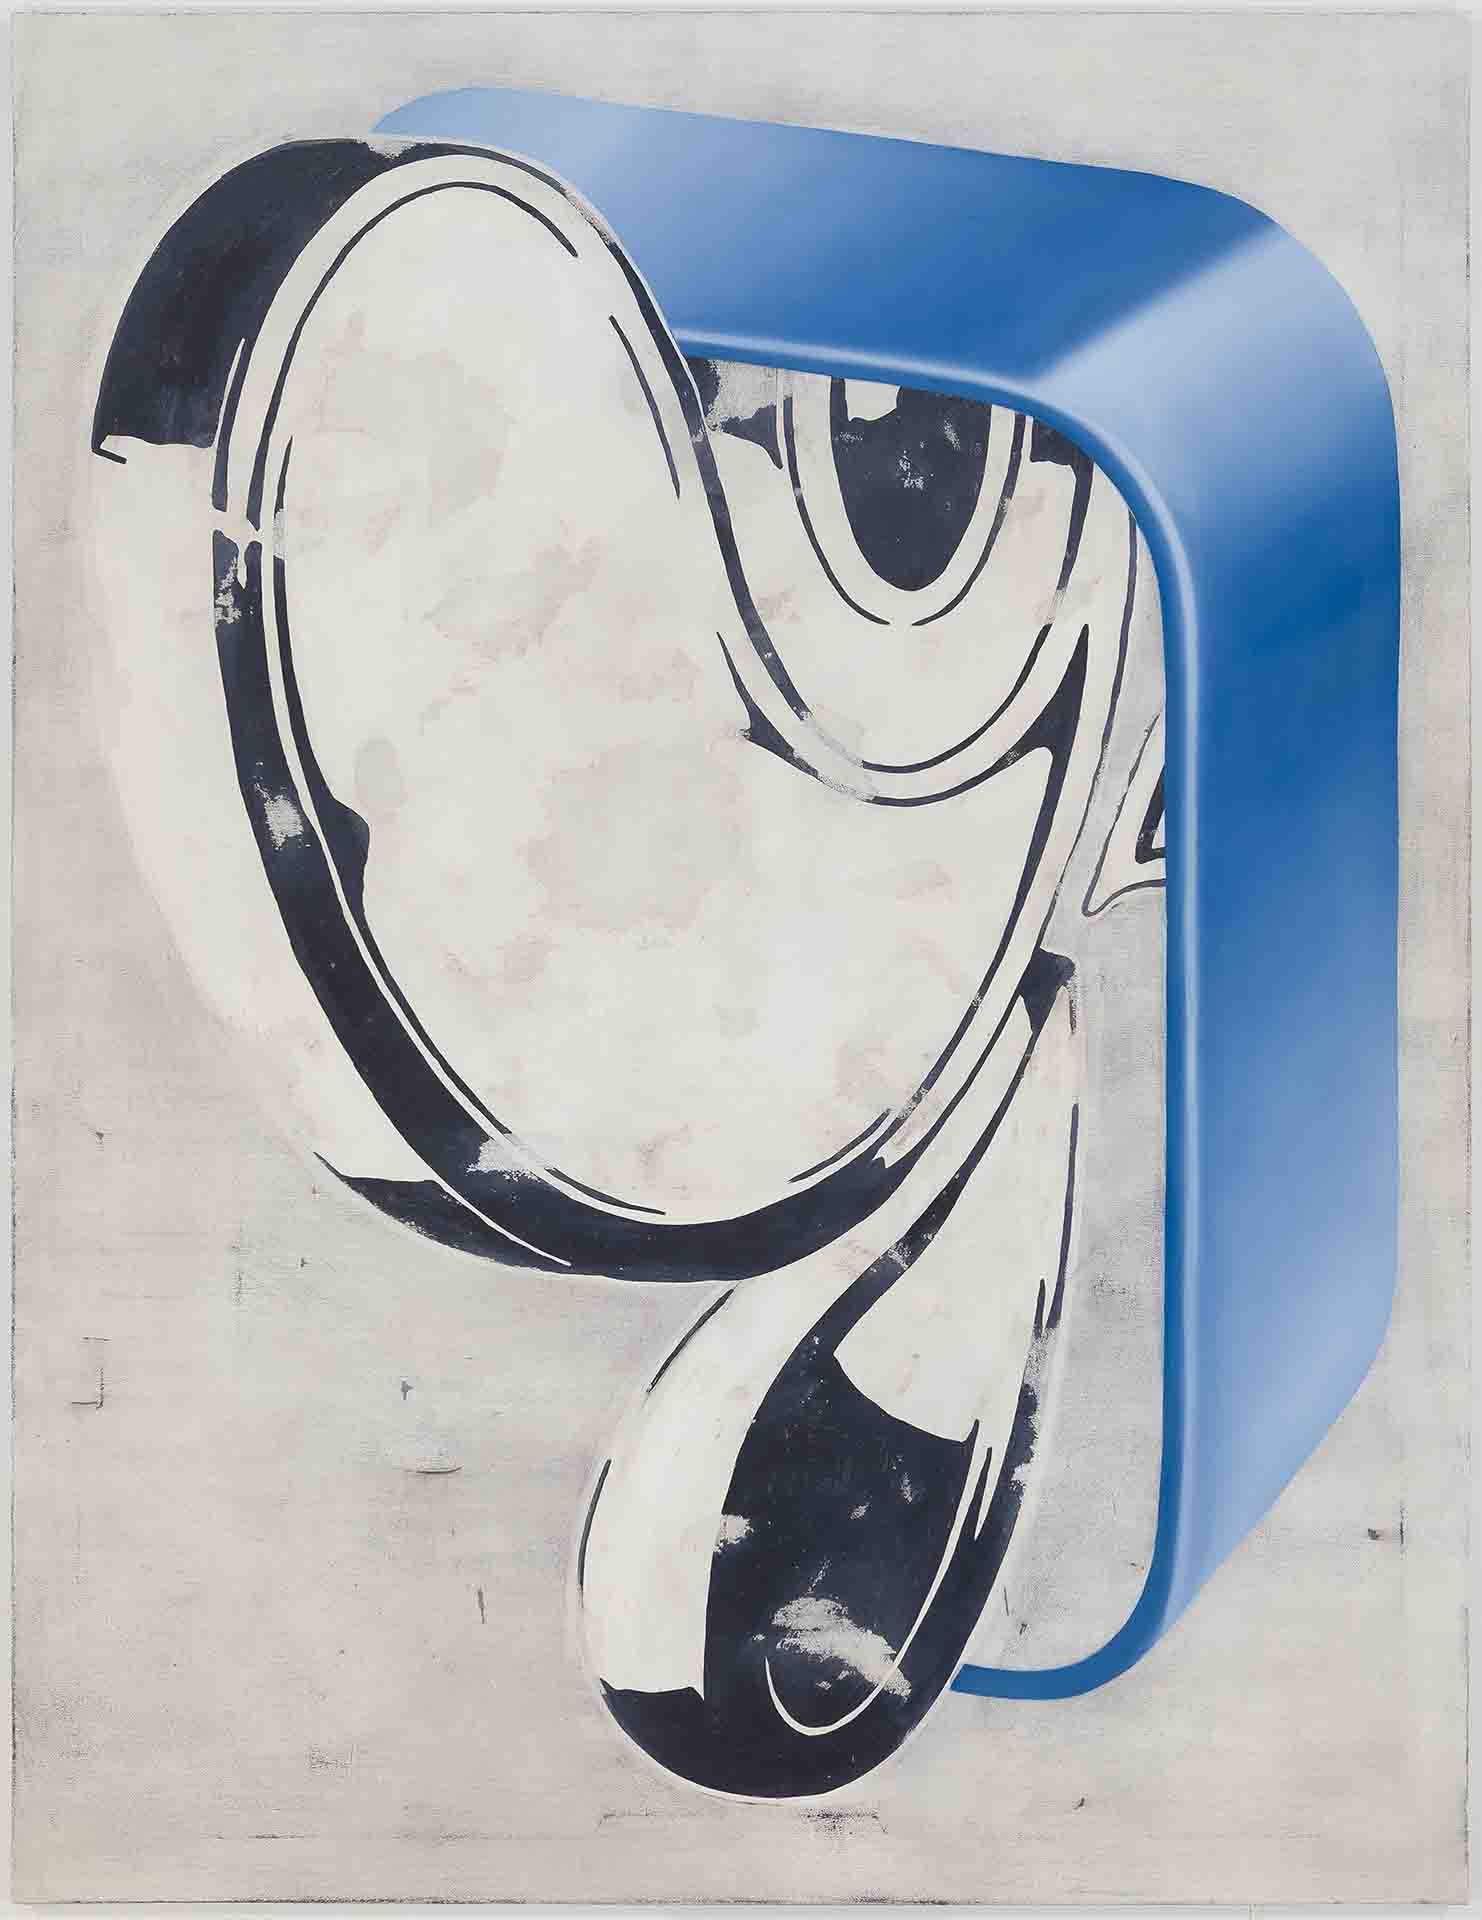 Grip, oil, acrylic, egg tempera, canvas, 200 x 150 cm, 2013